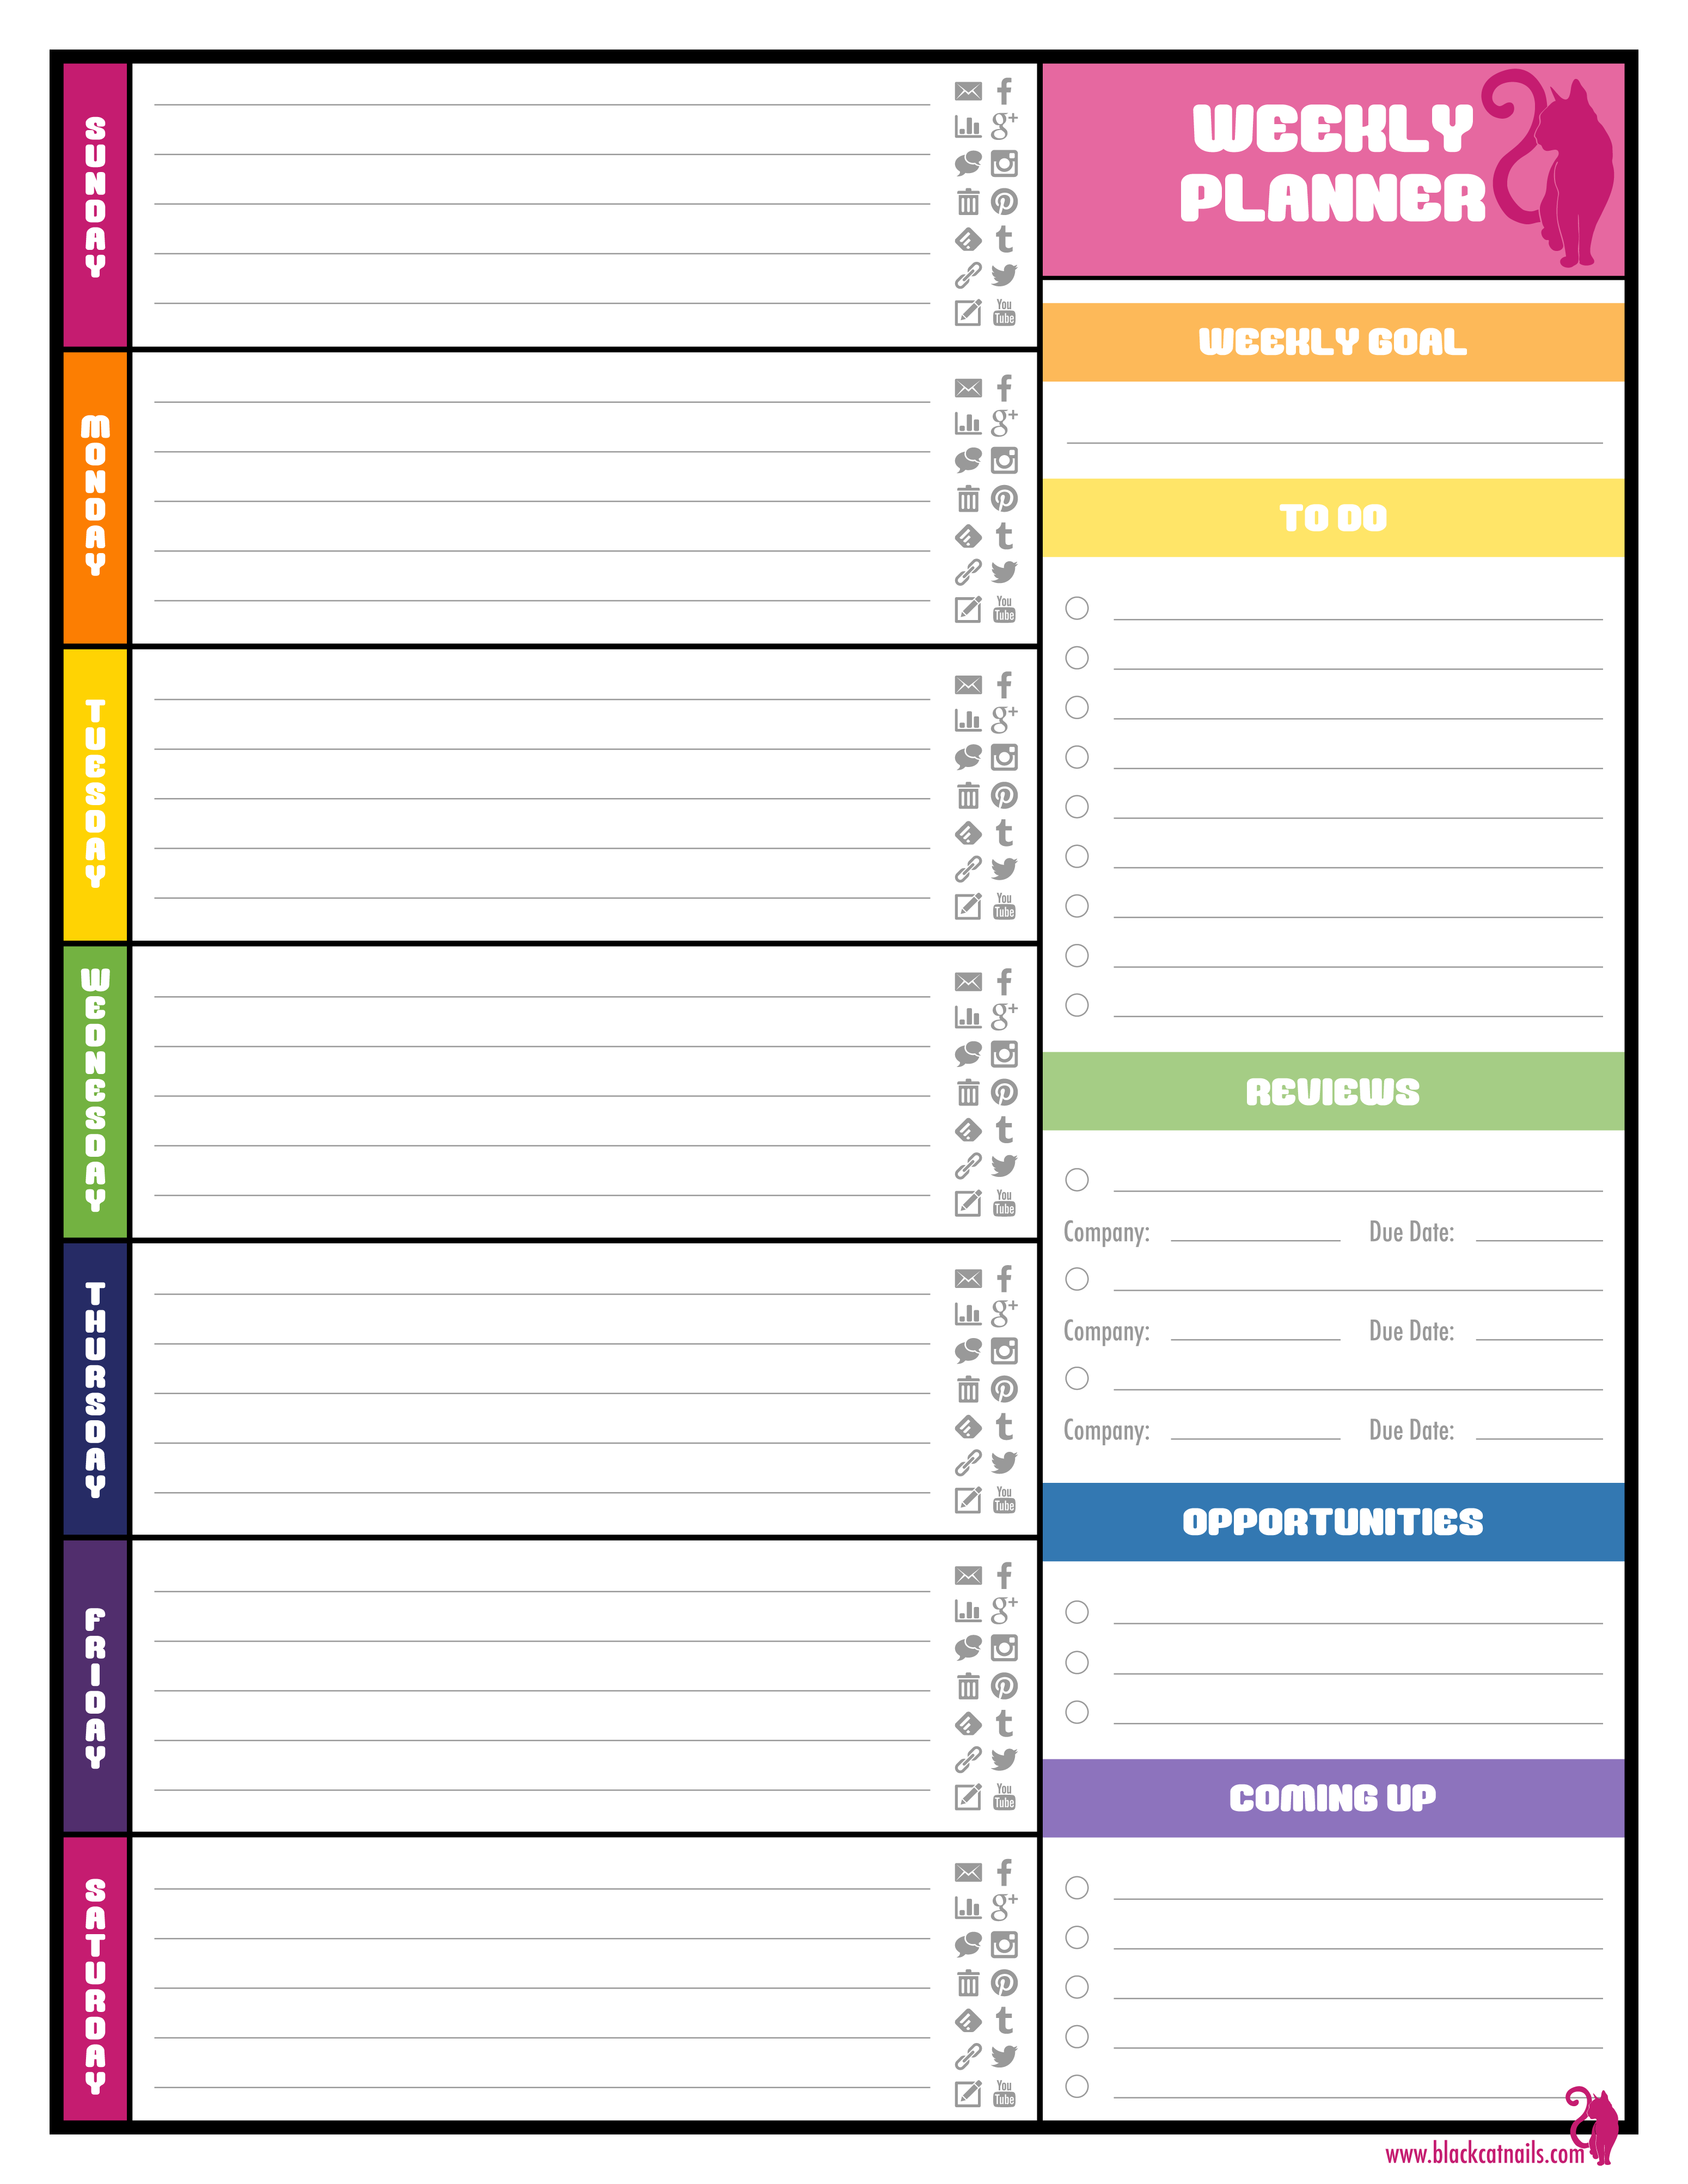 Colorful Weekly Blogging Planner Image | Blog Life | Pinterest 